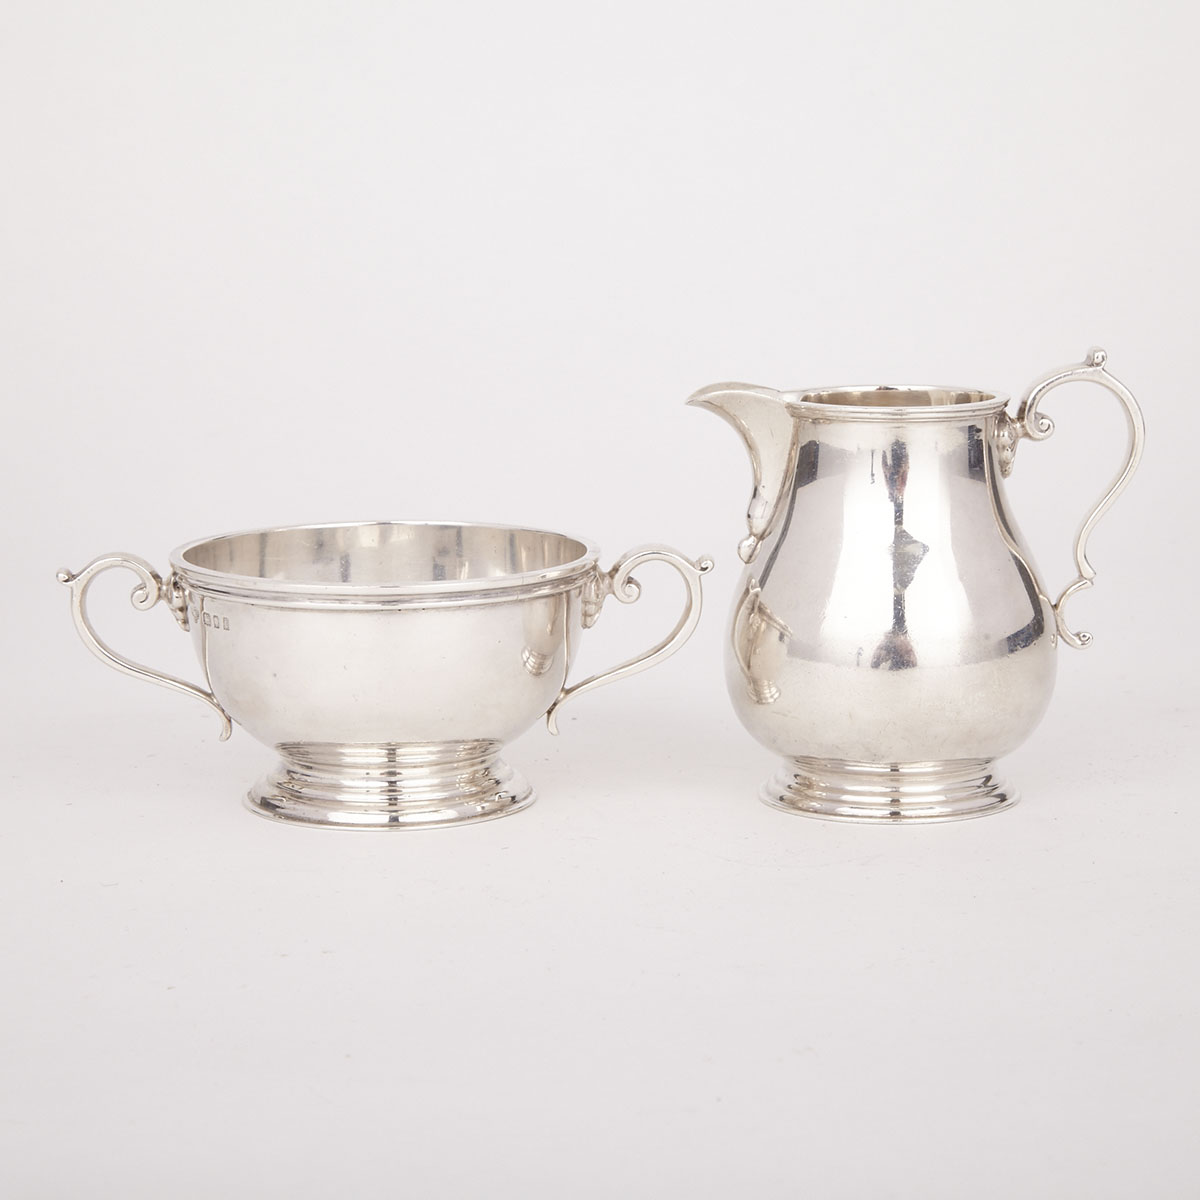 English Silver Cream Jug and Sugar Bowl, Goldsmiths & Silversmiths Co., London, 1933/34